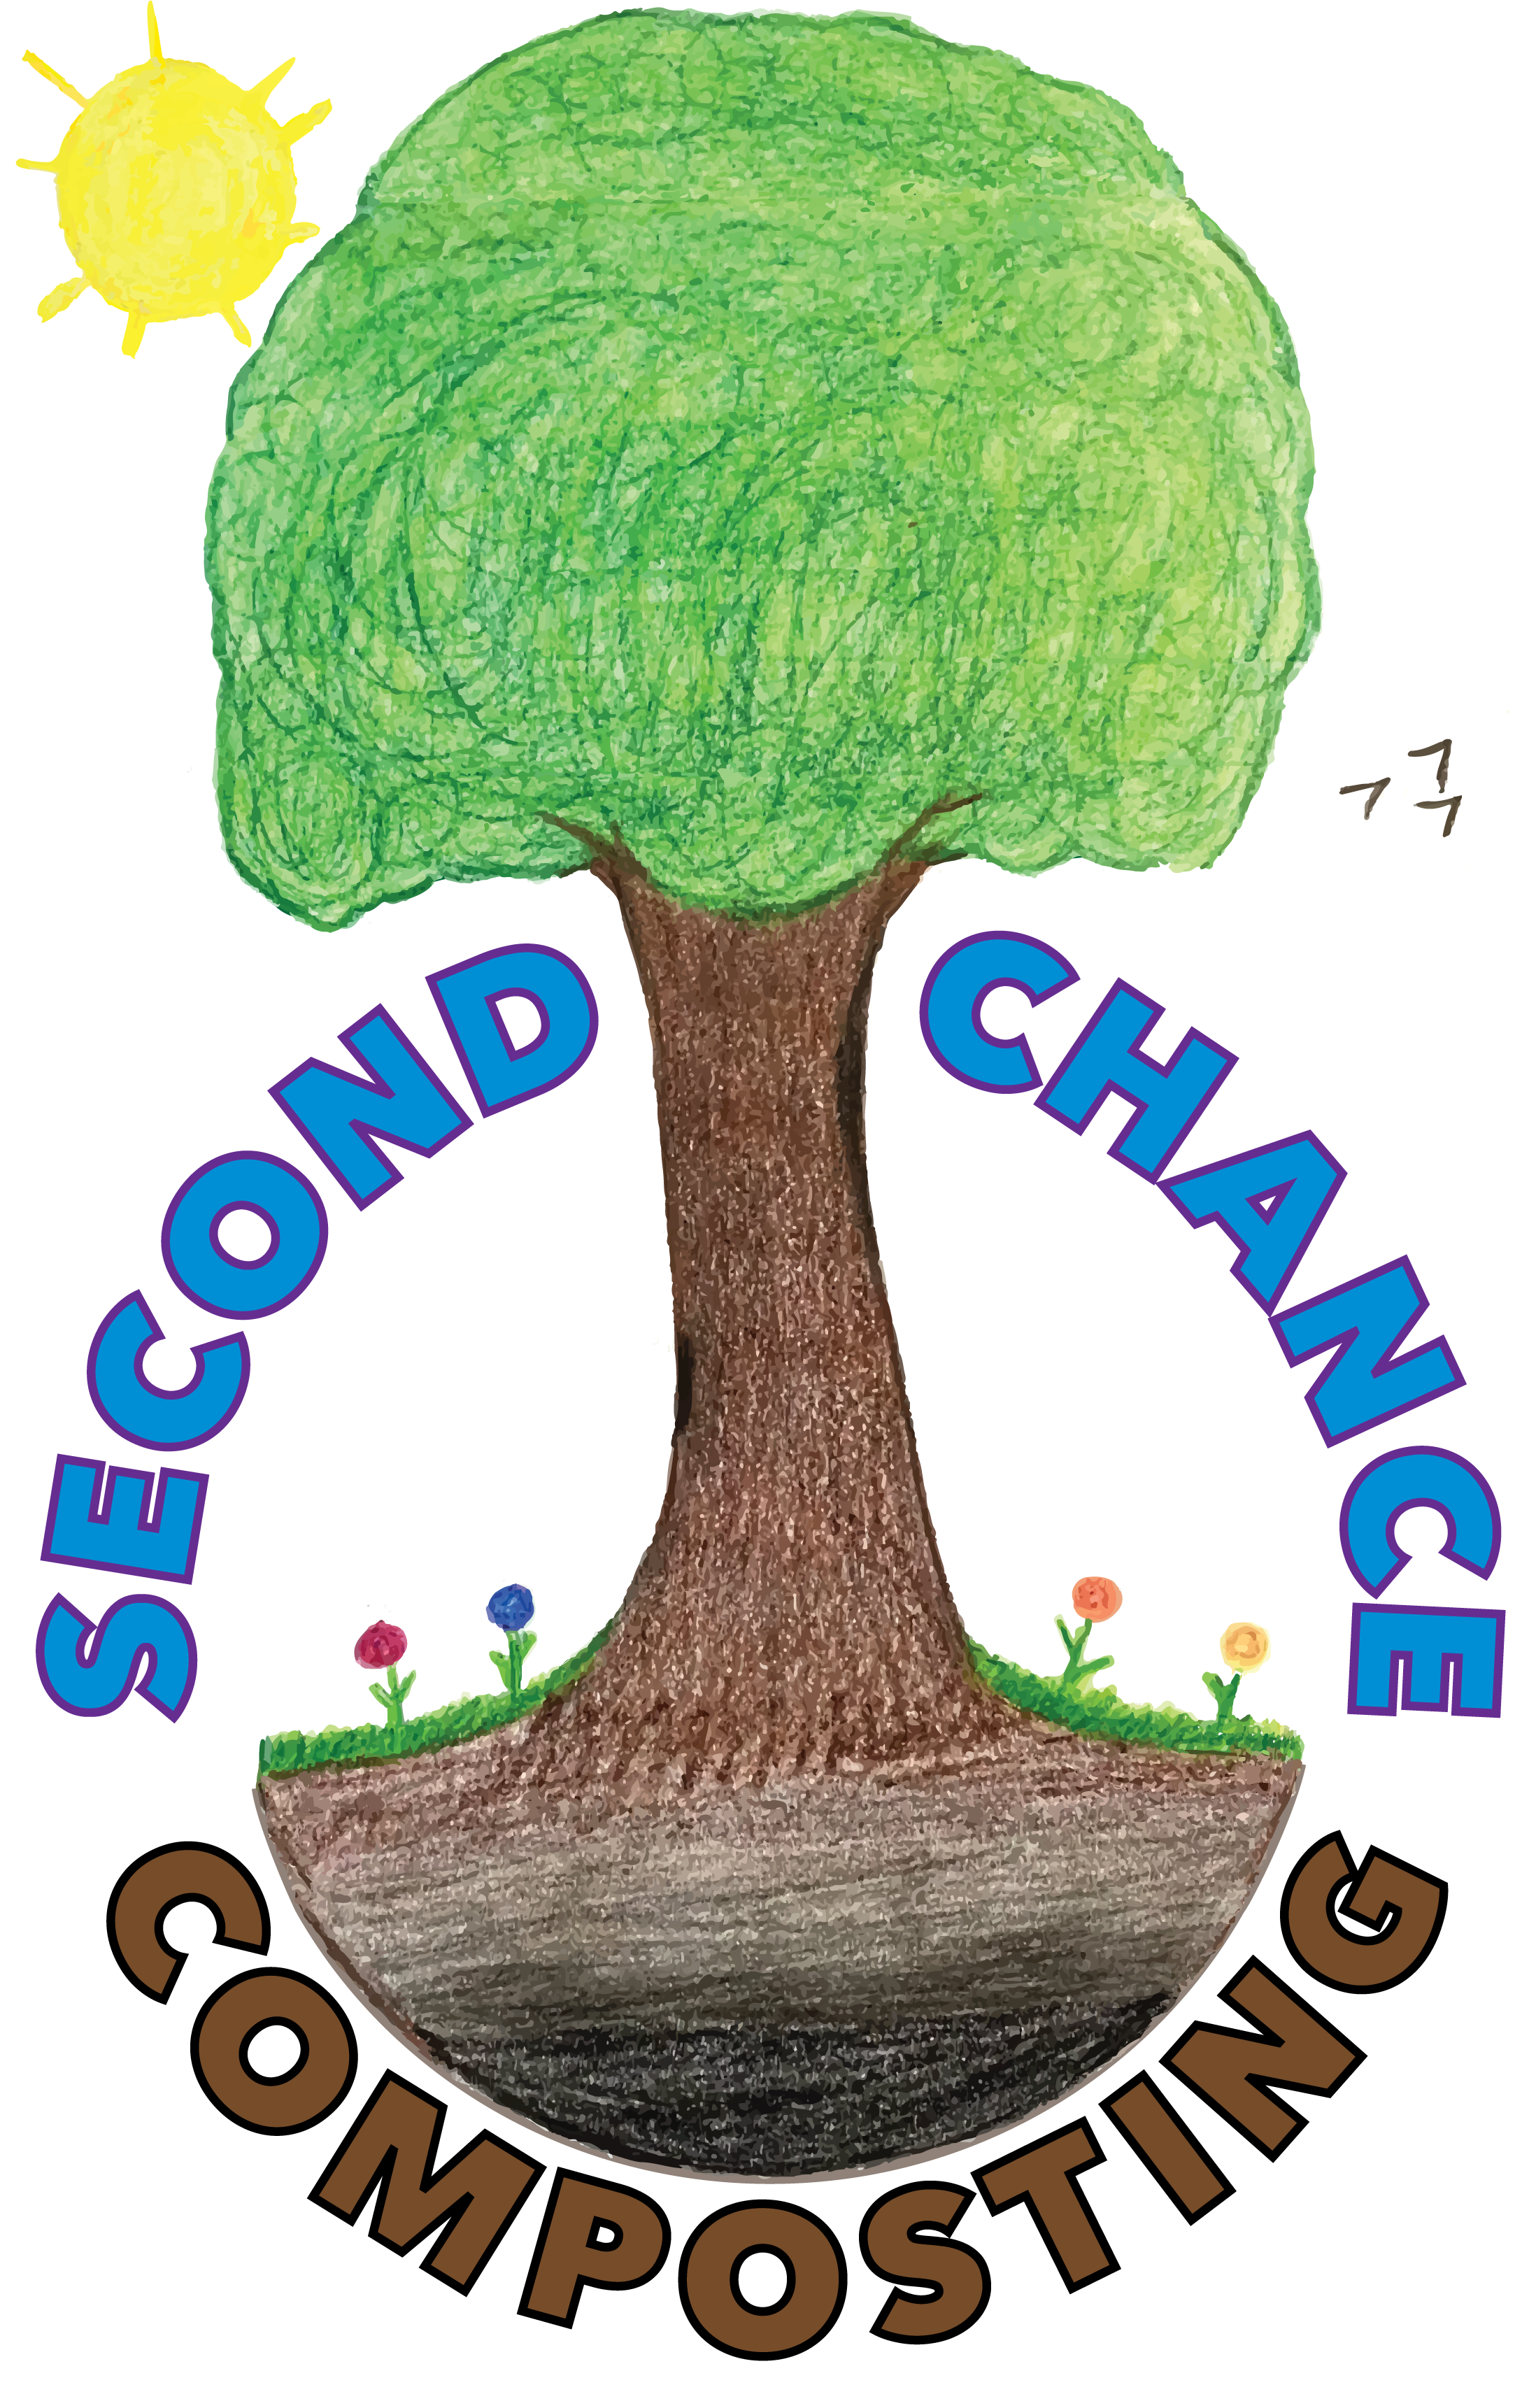 Second Chance Composting LLC